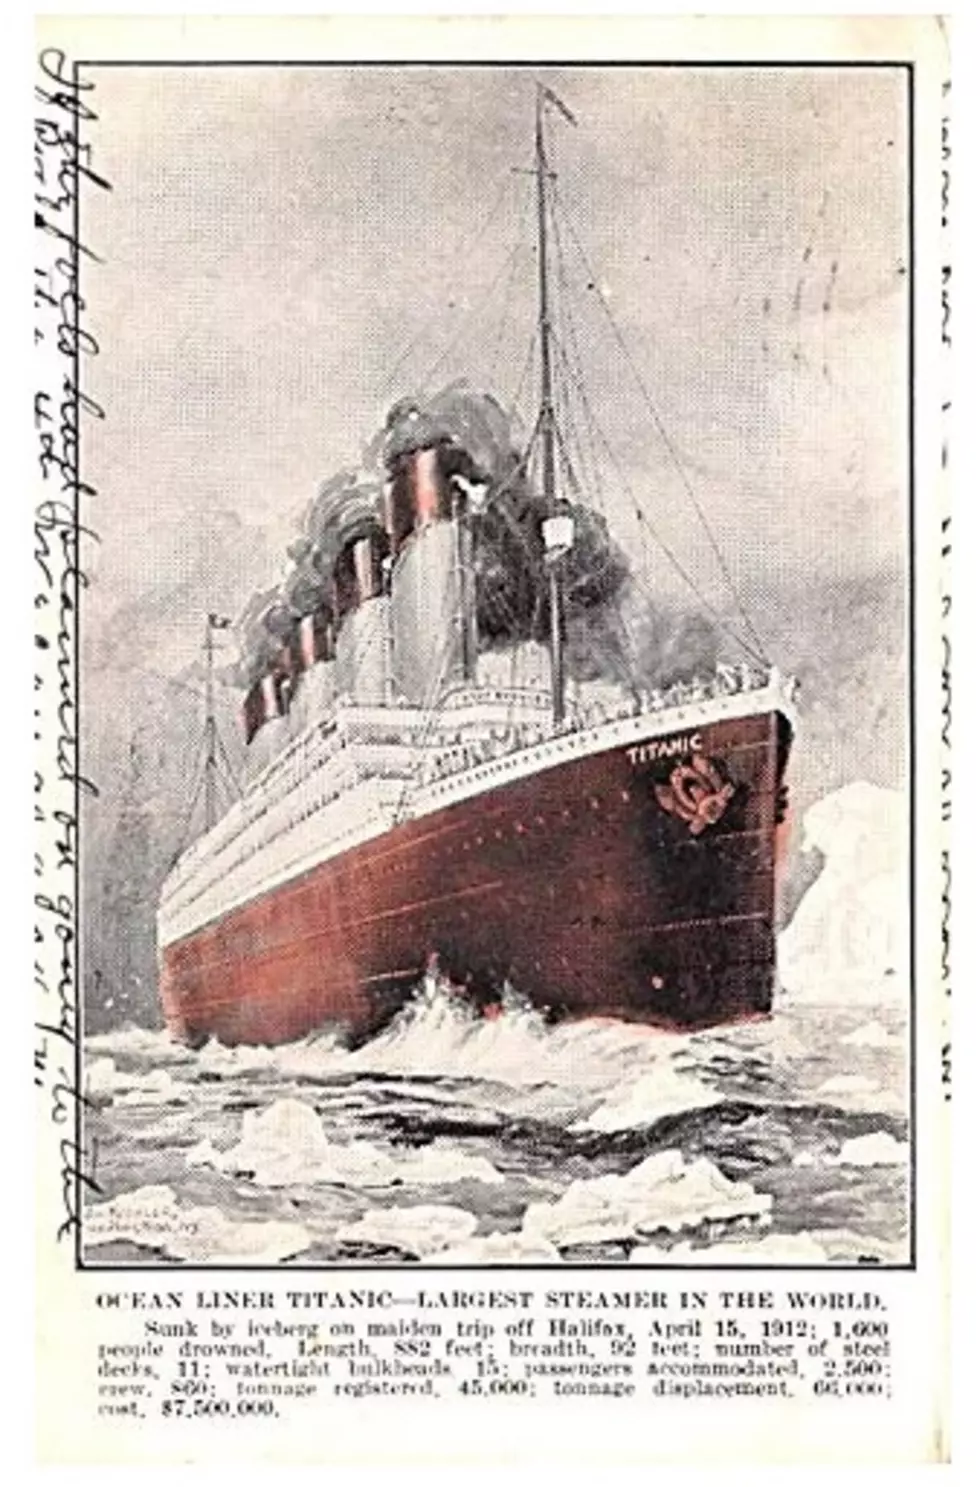 Steamer CITY of CHICAGO, St. JOSEPH, MICHIGAN Naval Postcard 1912